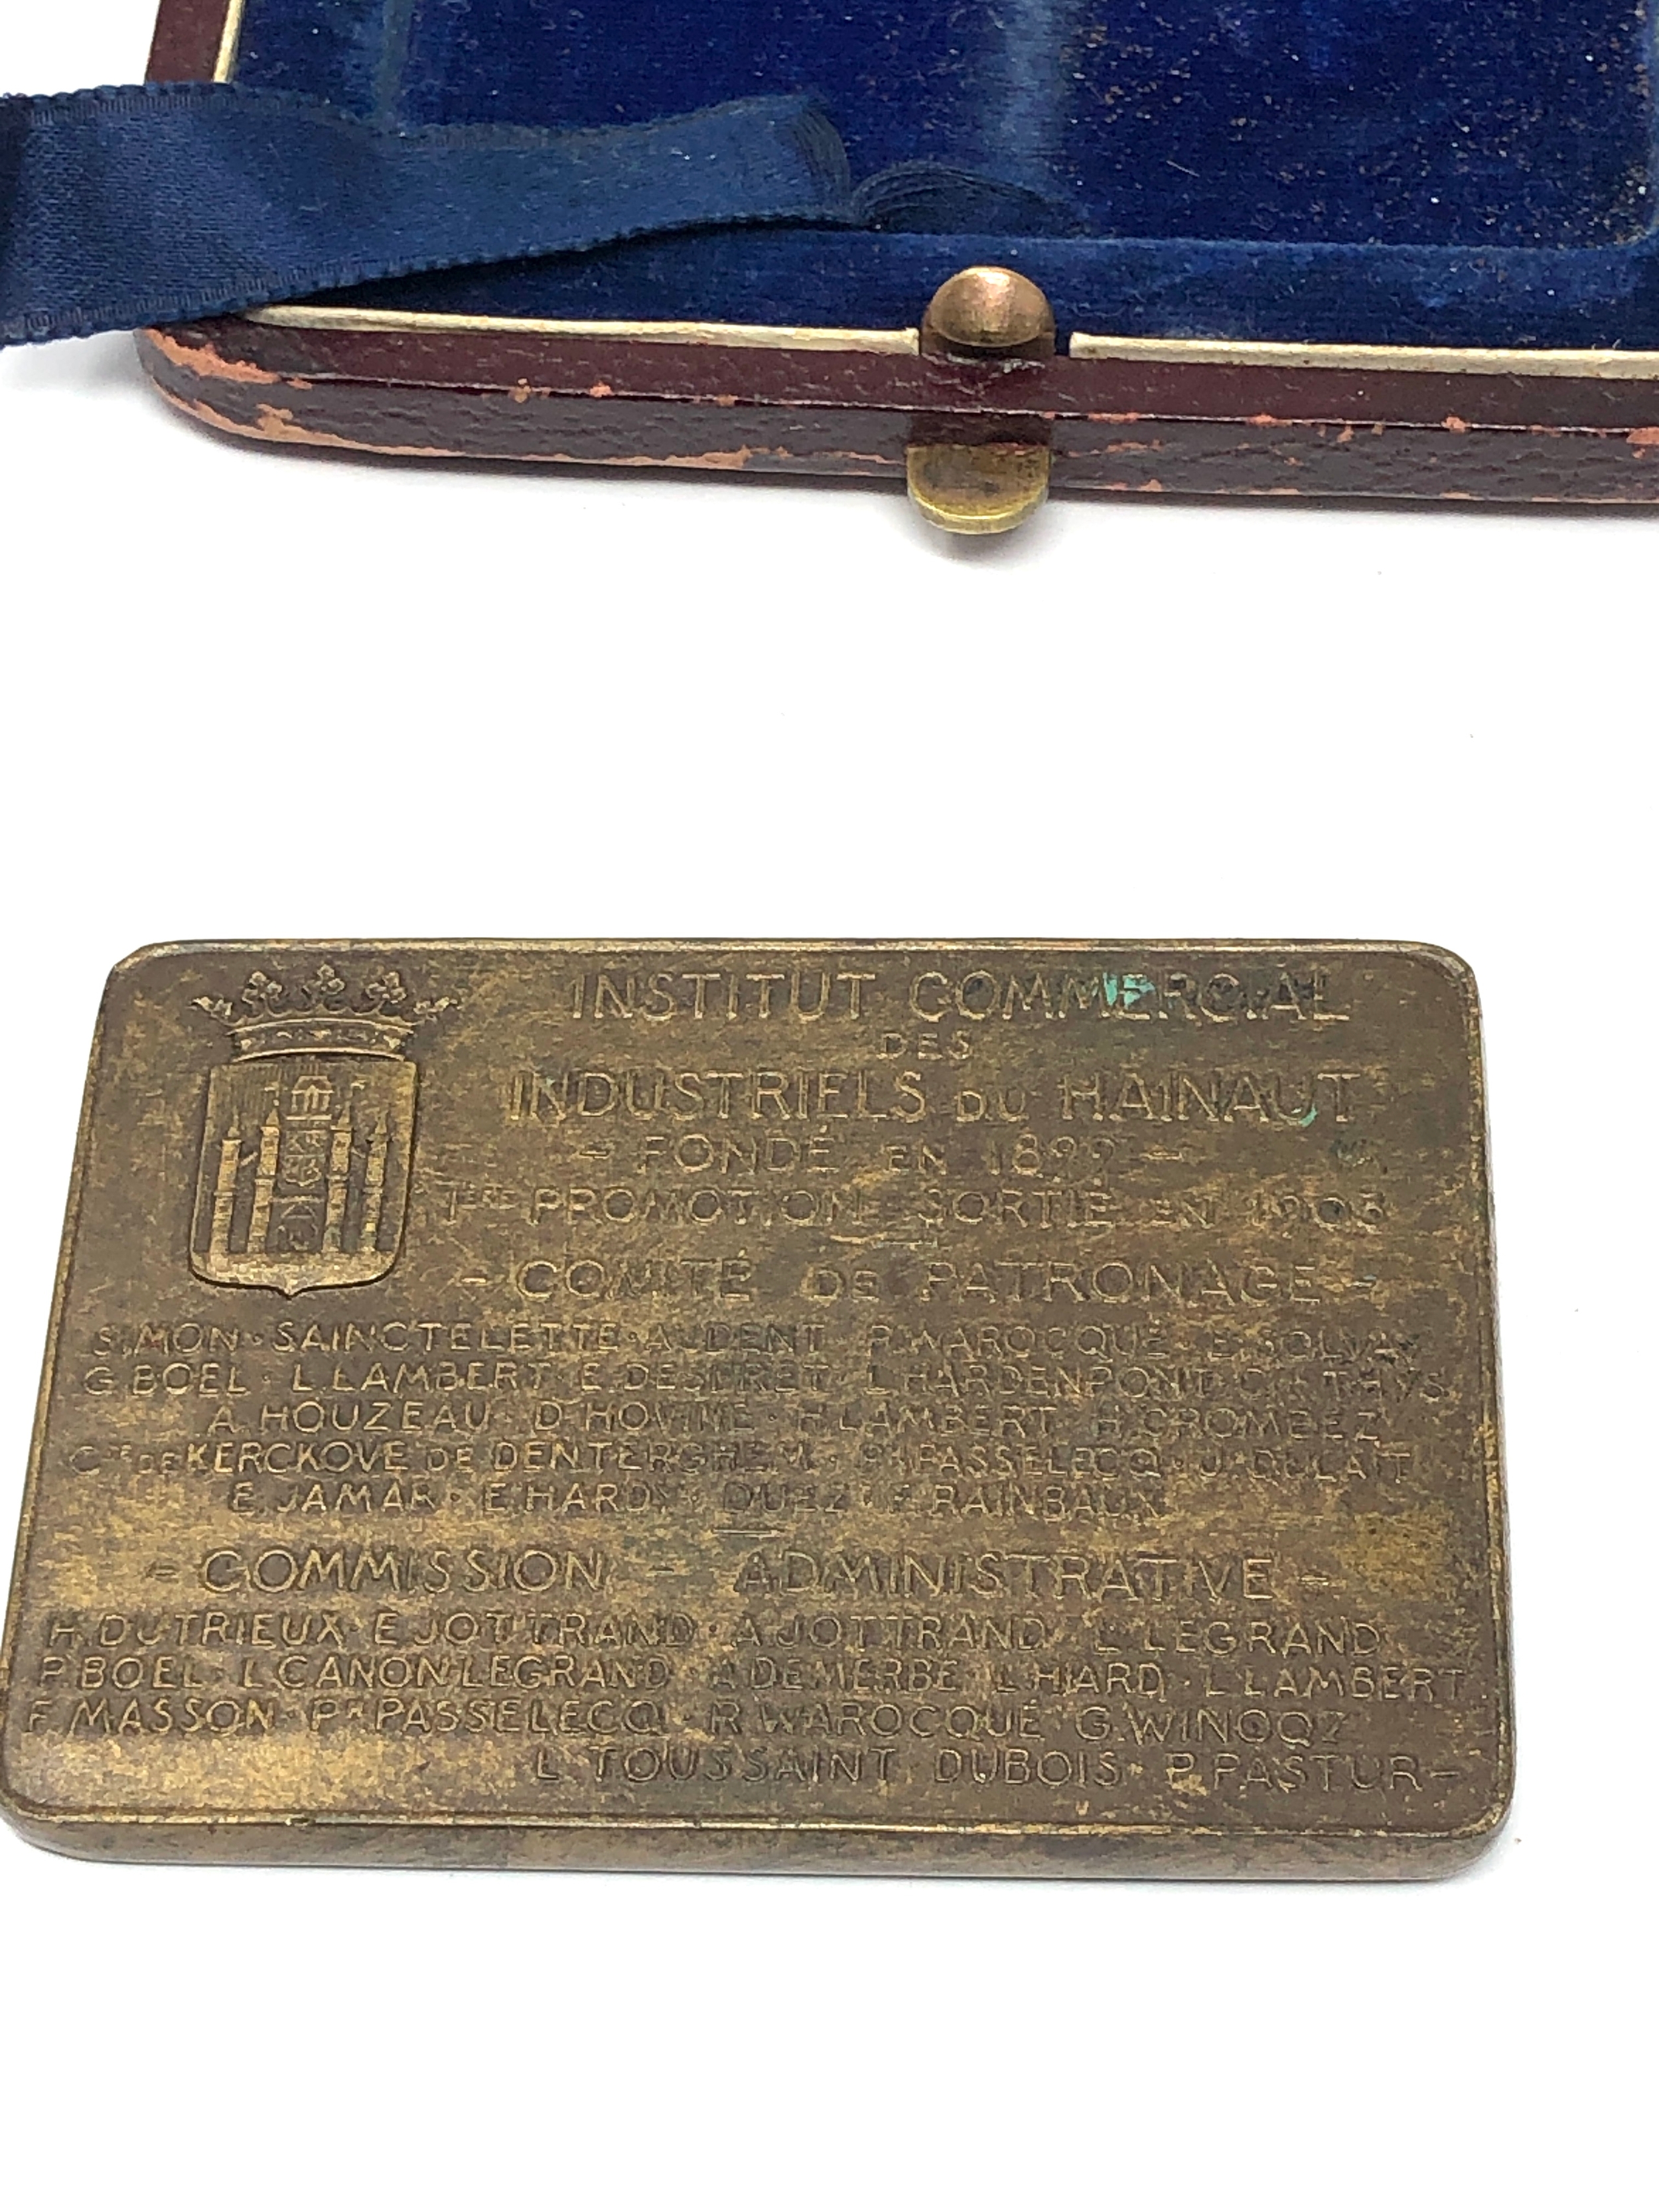 Original 1899 boxed Belgium hainault commercial institute Henri dutrieux bronze medal by Rombaux - Image 4 of 5